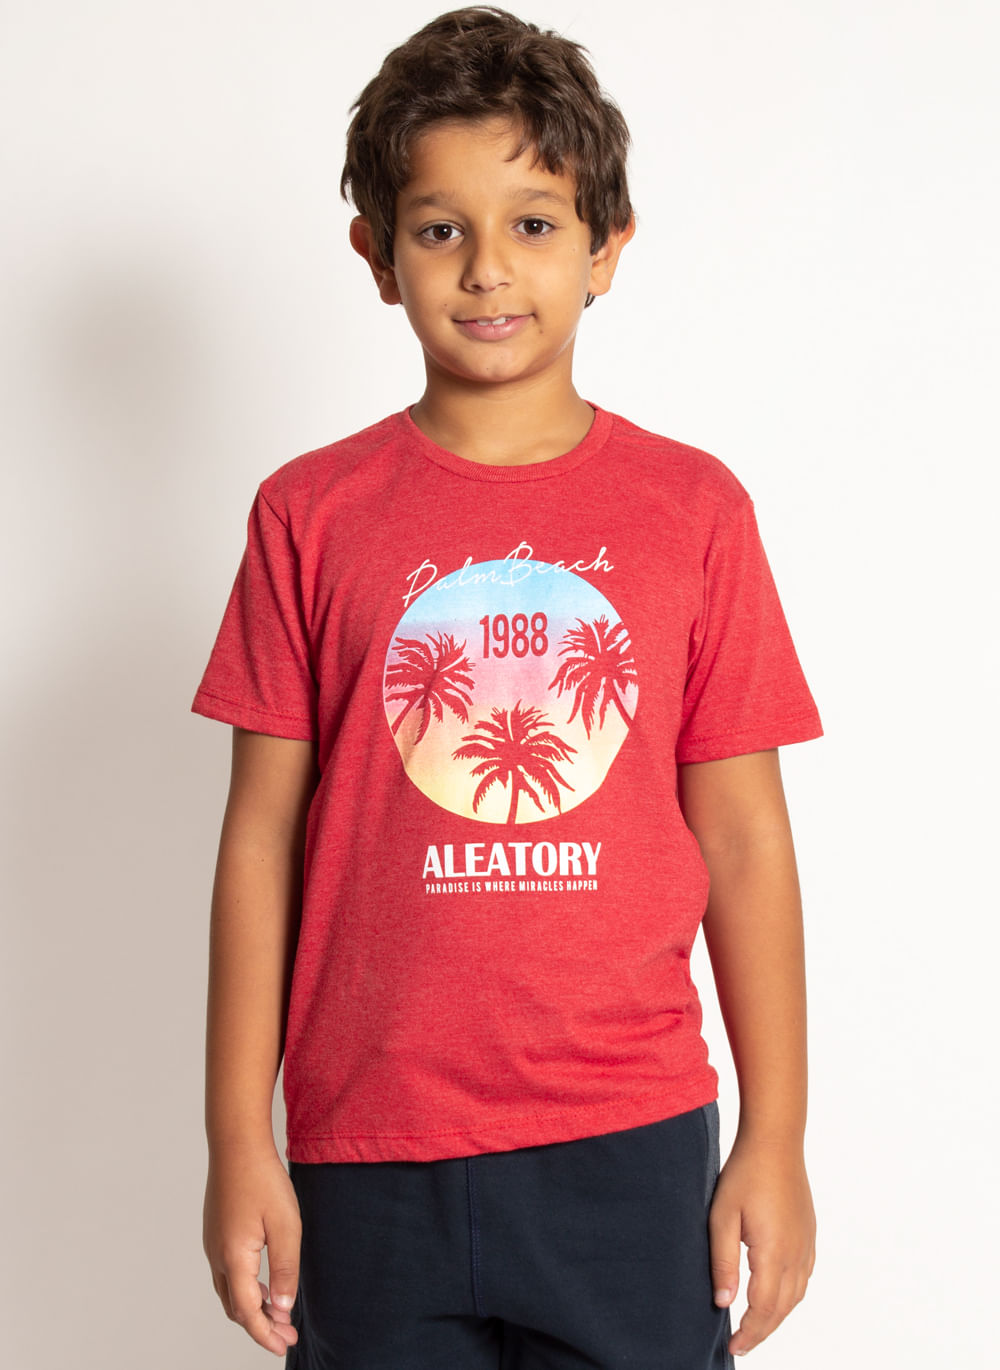 camiseta-aleatory-infantil-estampada-palm-beach-modelo-2020-4-